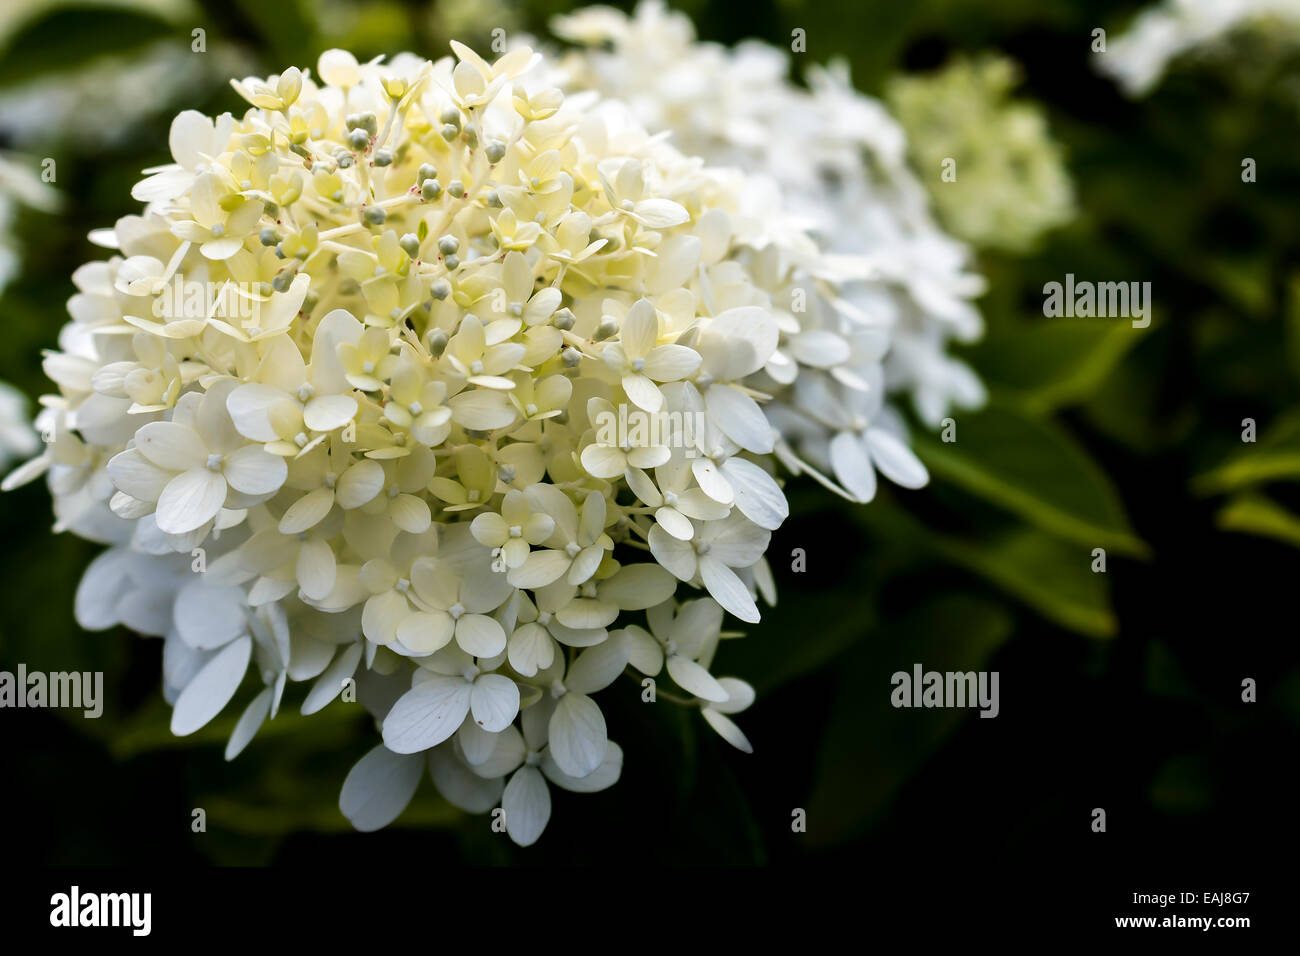 white ball of fragile flowers Stock Photo